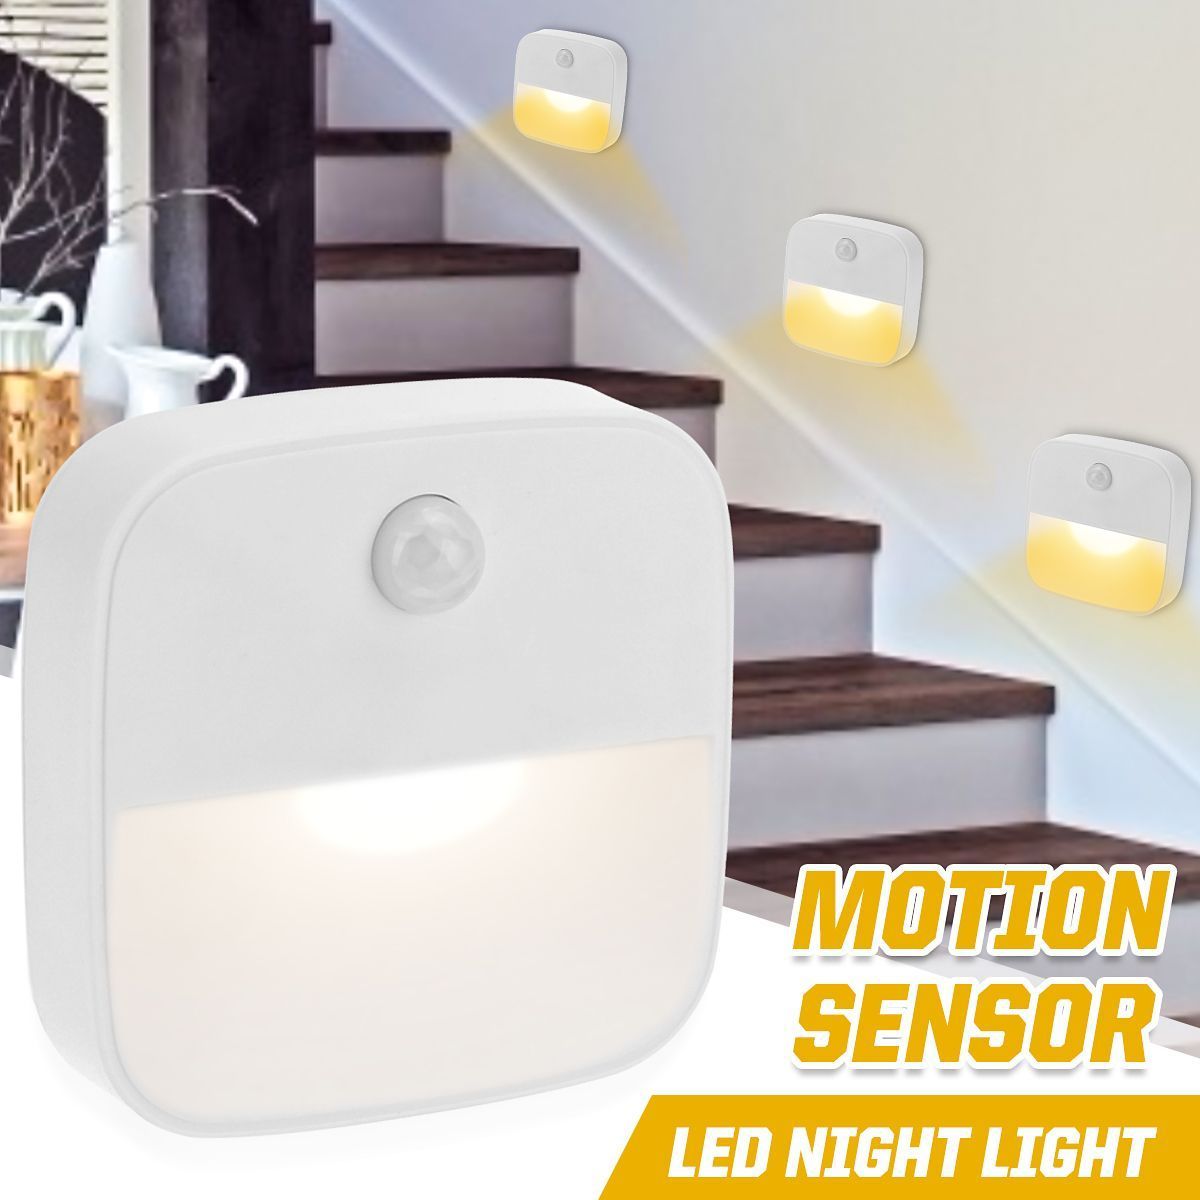 110-220V-EU-Plug-Motion-Sensor-Night-Light-Auto-Turn-OnOff-Human-Movement-Sensing-Lamp-1697177